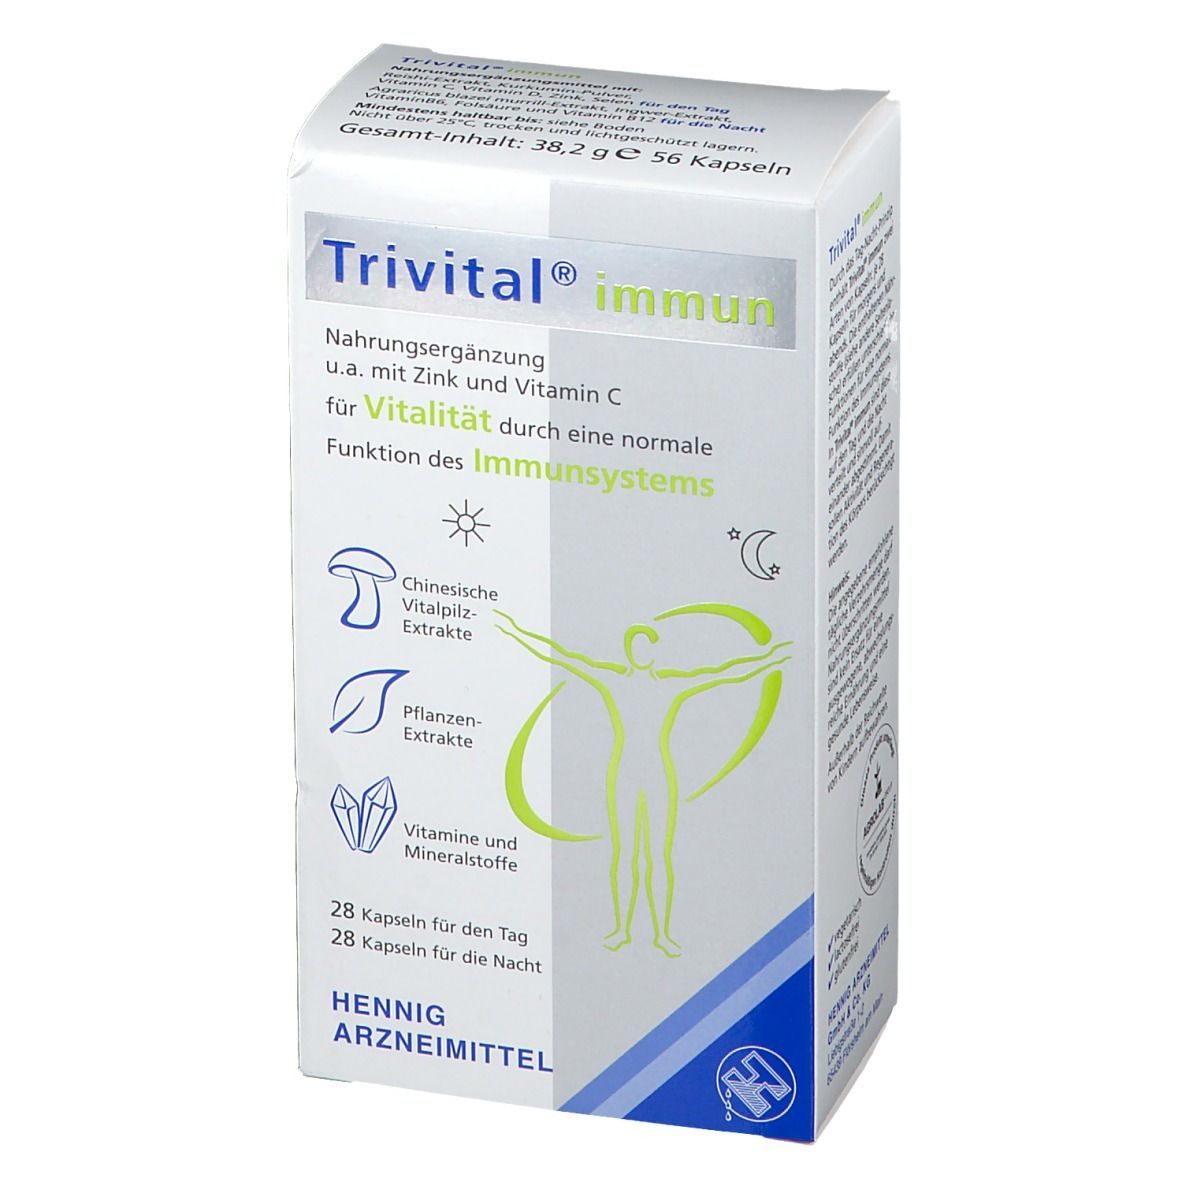 Trivital® immun